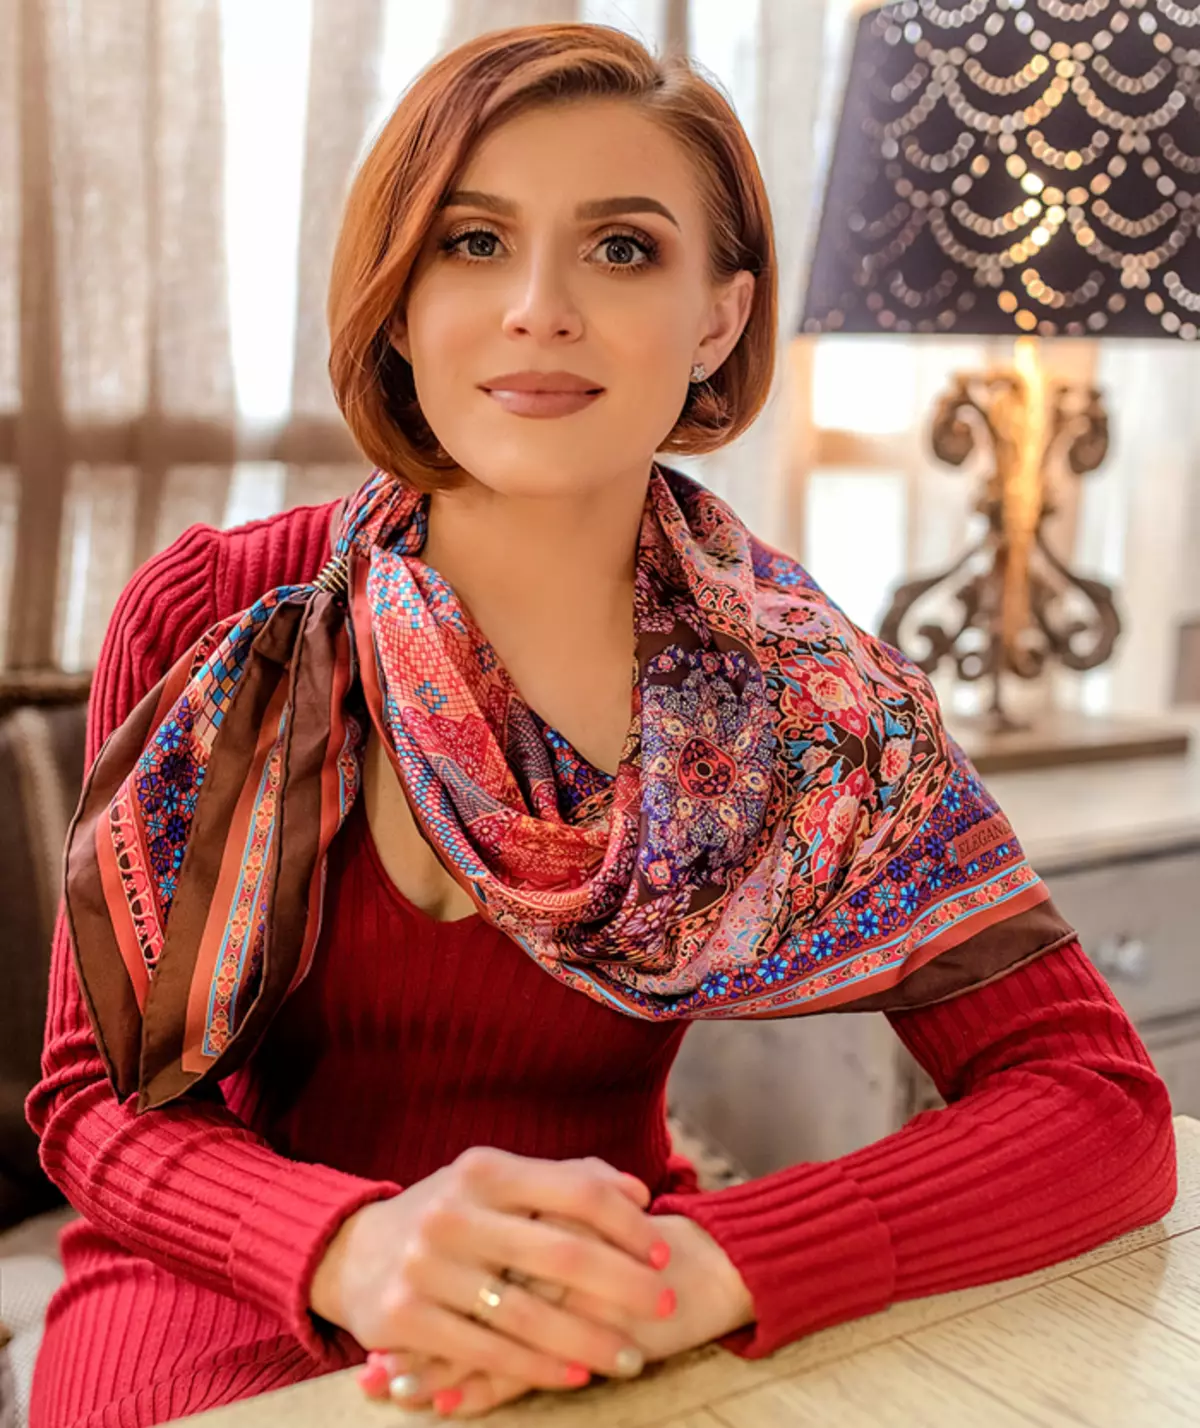 Evgenia Ghanev